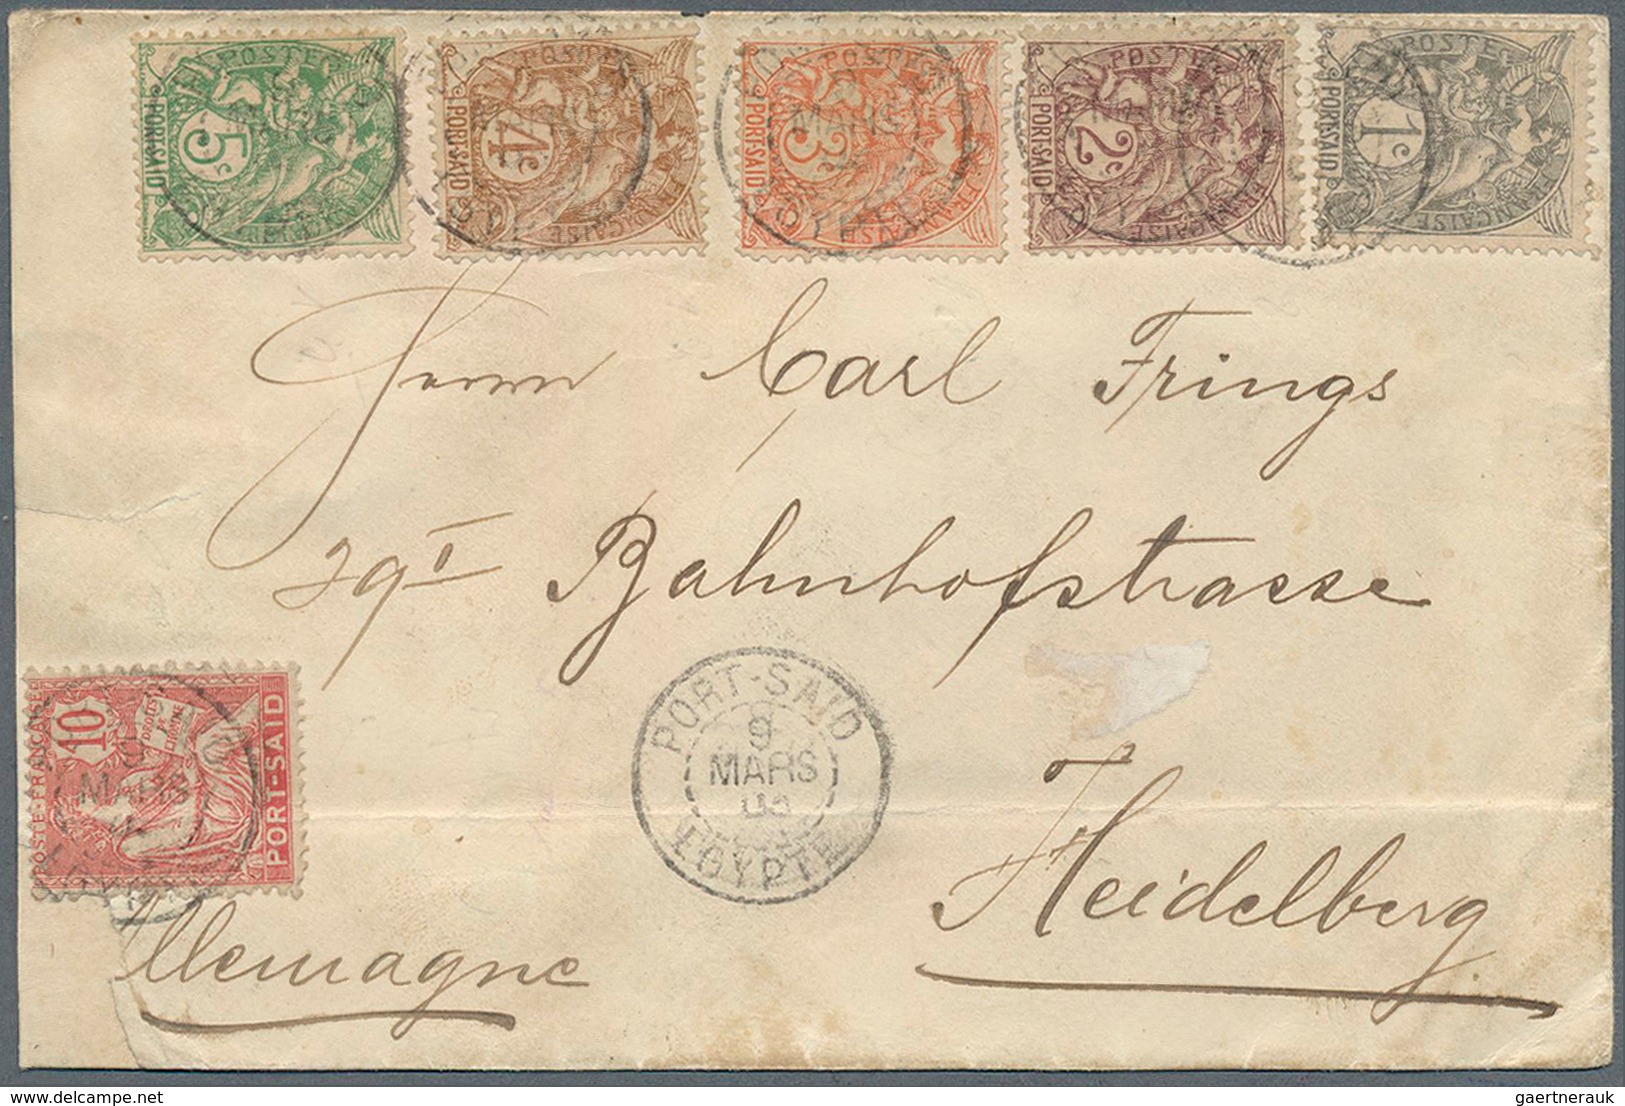 26497 Französische Post in Ägypten - Alexandria: 1812/1927, French P.O. Alexandria/Port Said, mint and use